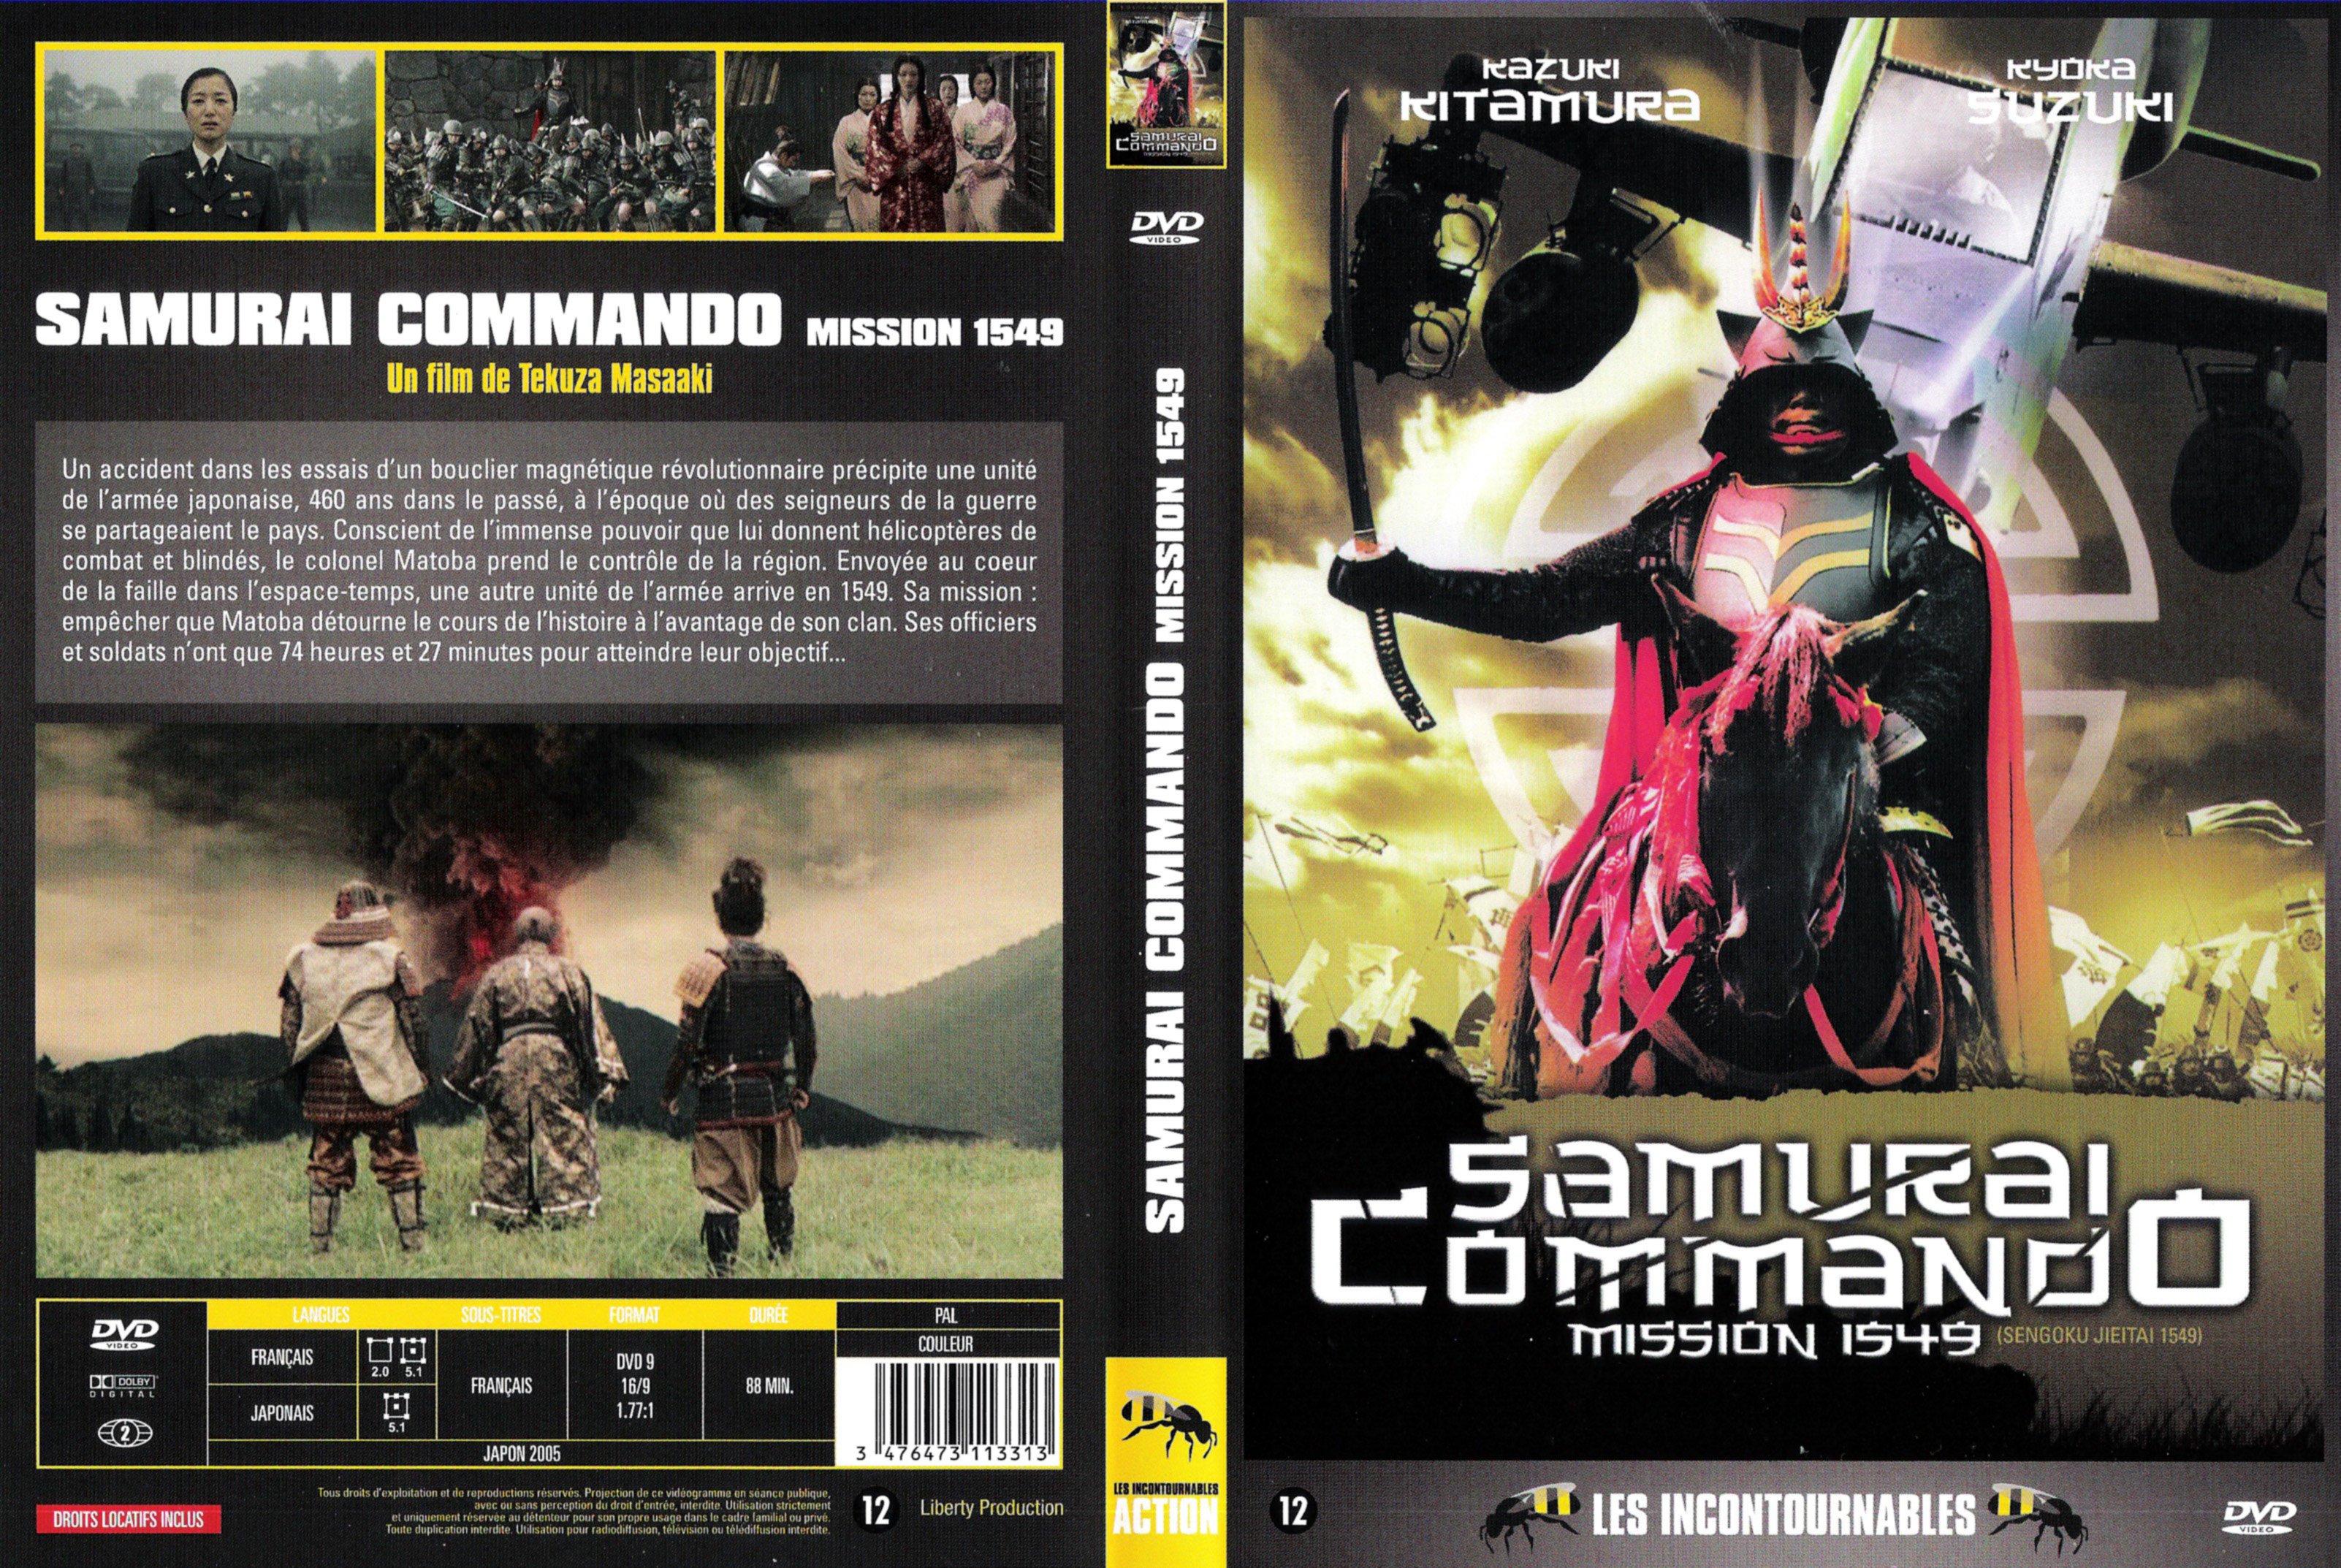 Jaquette DVD Samurai commando v2